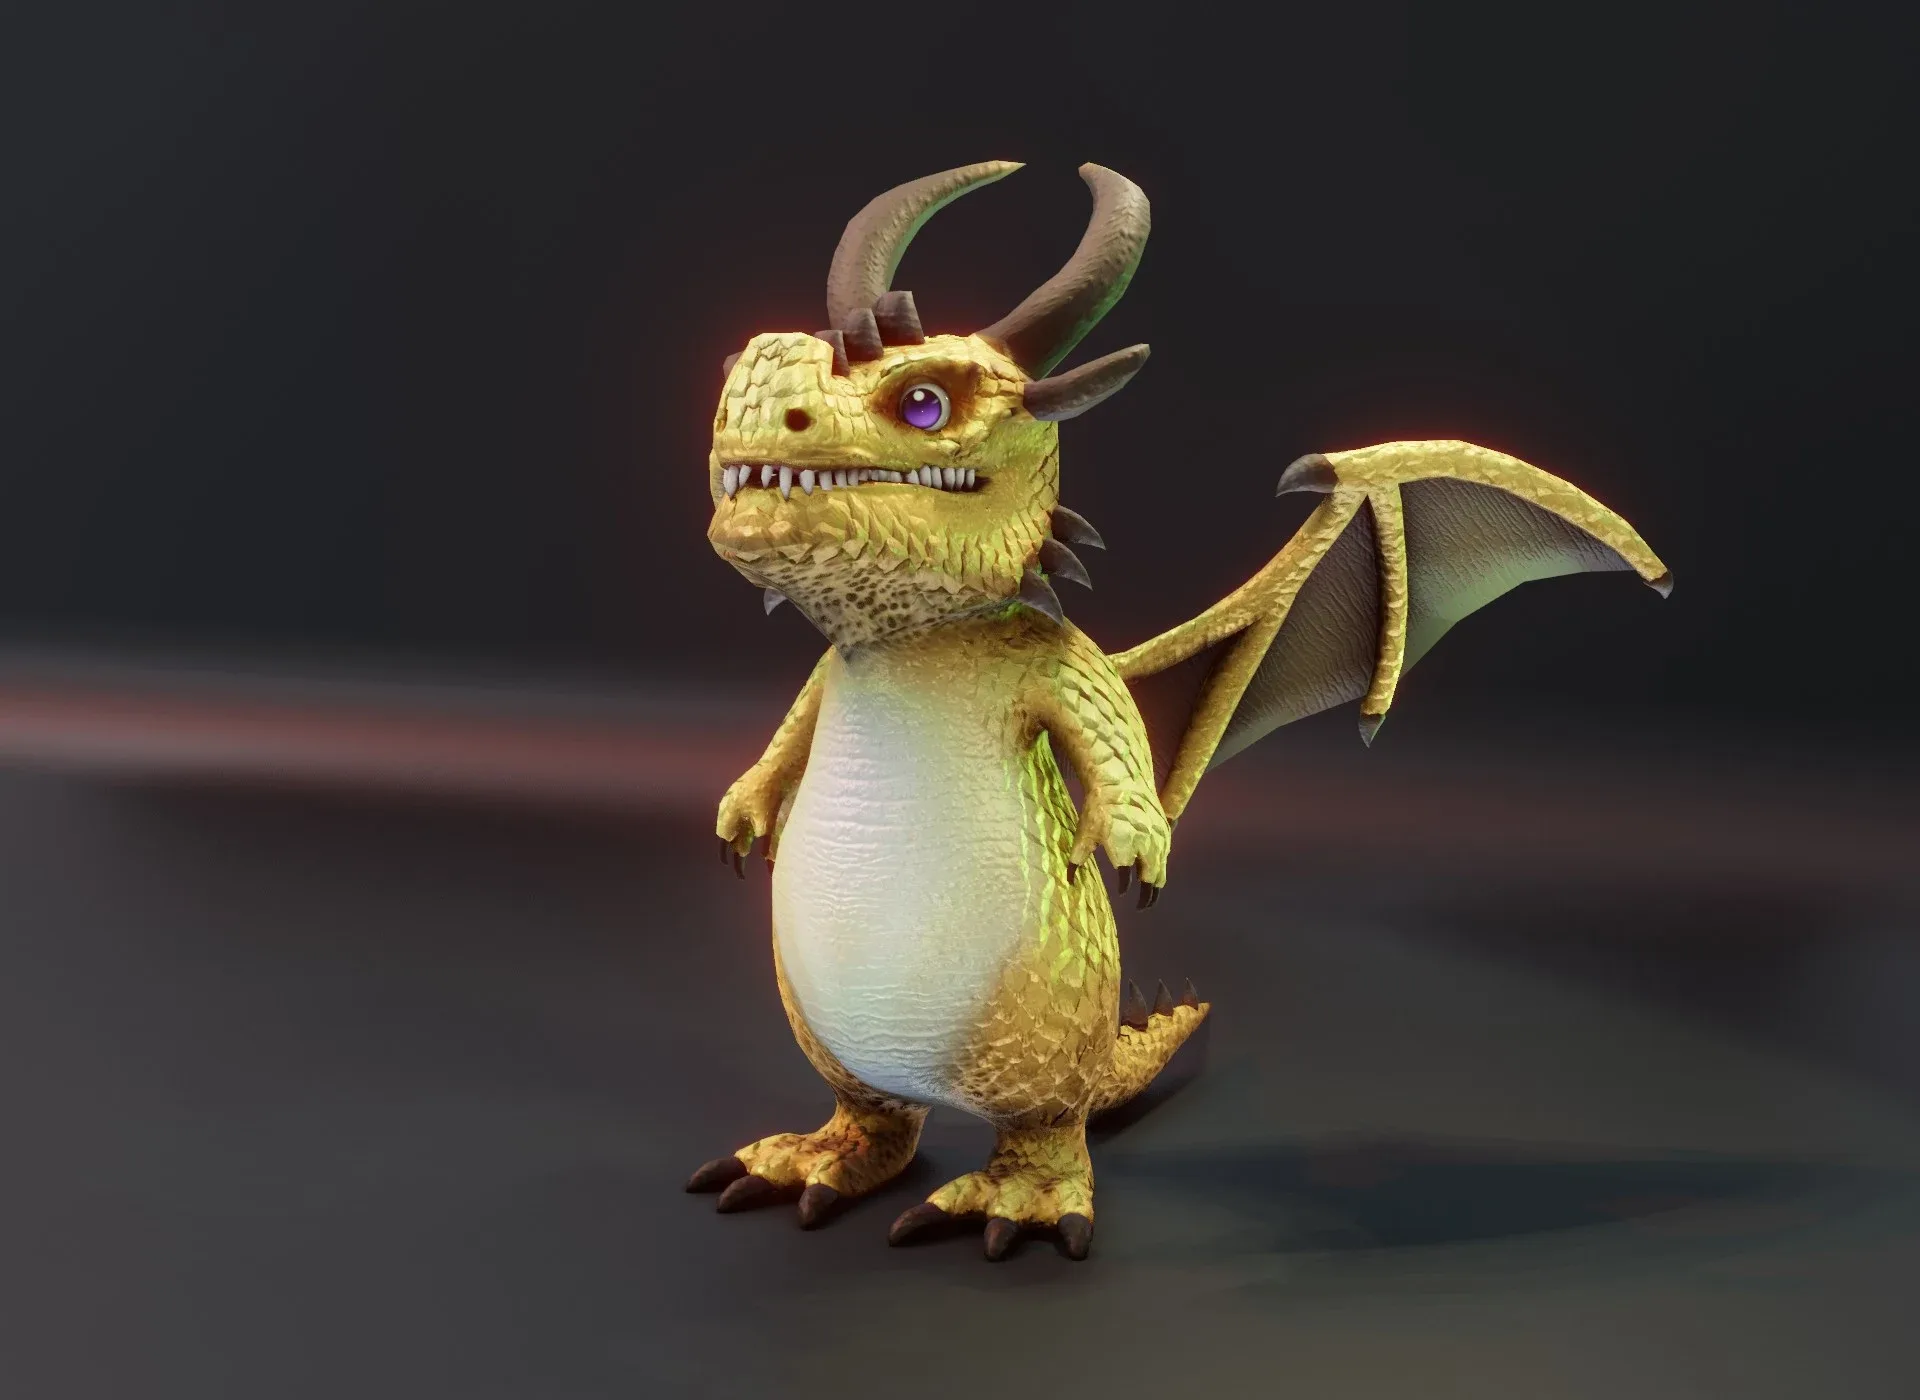 Cartoon Brass Dragon Low-poly 3D Model